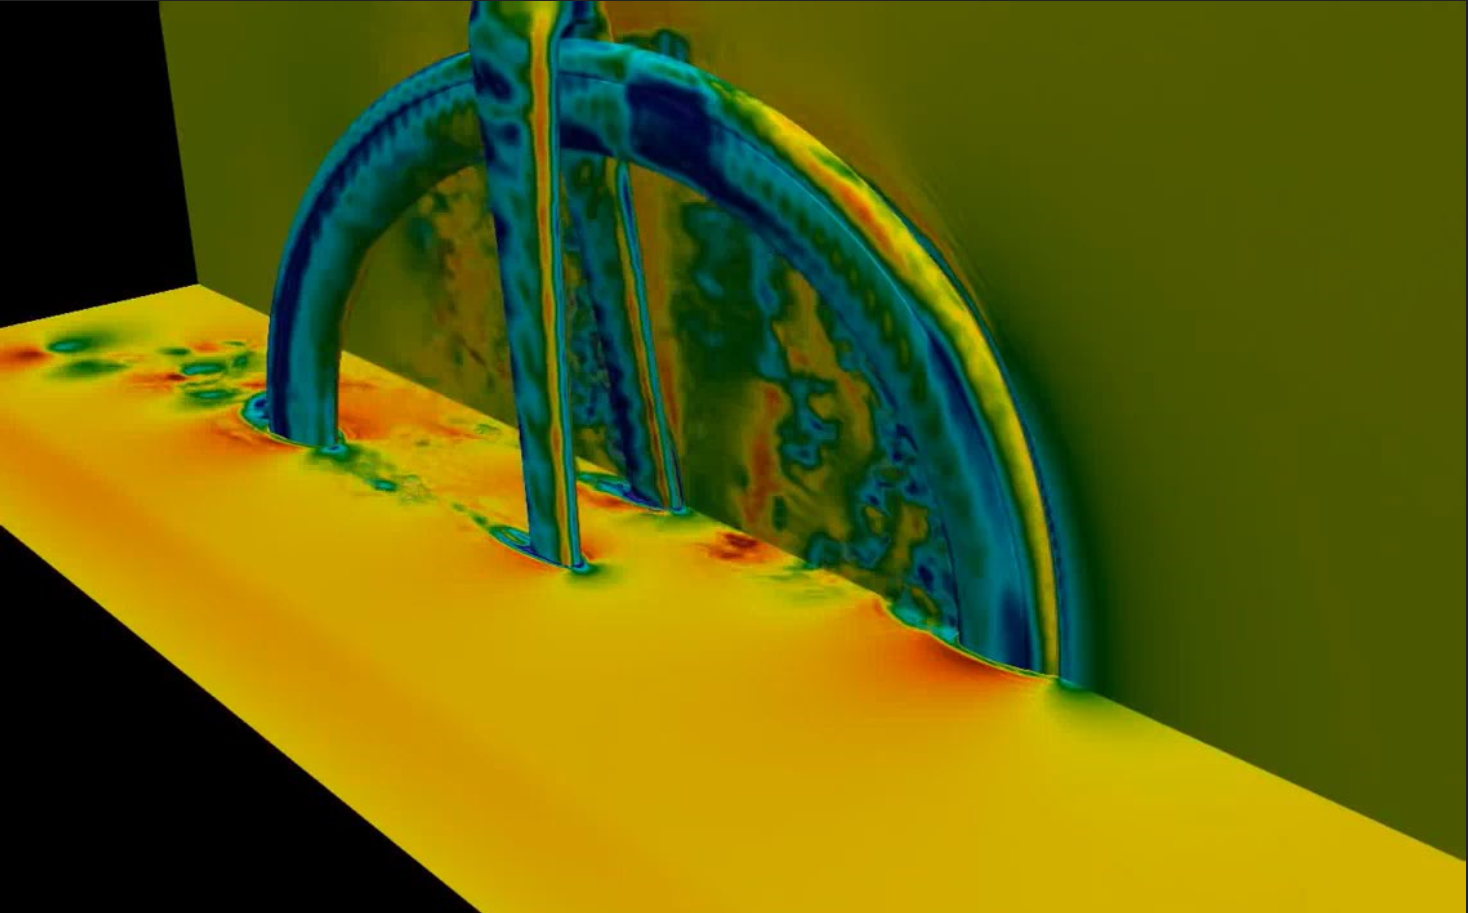 velocite cfd carbon rim simulation animation still